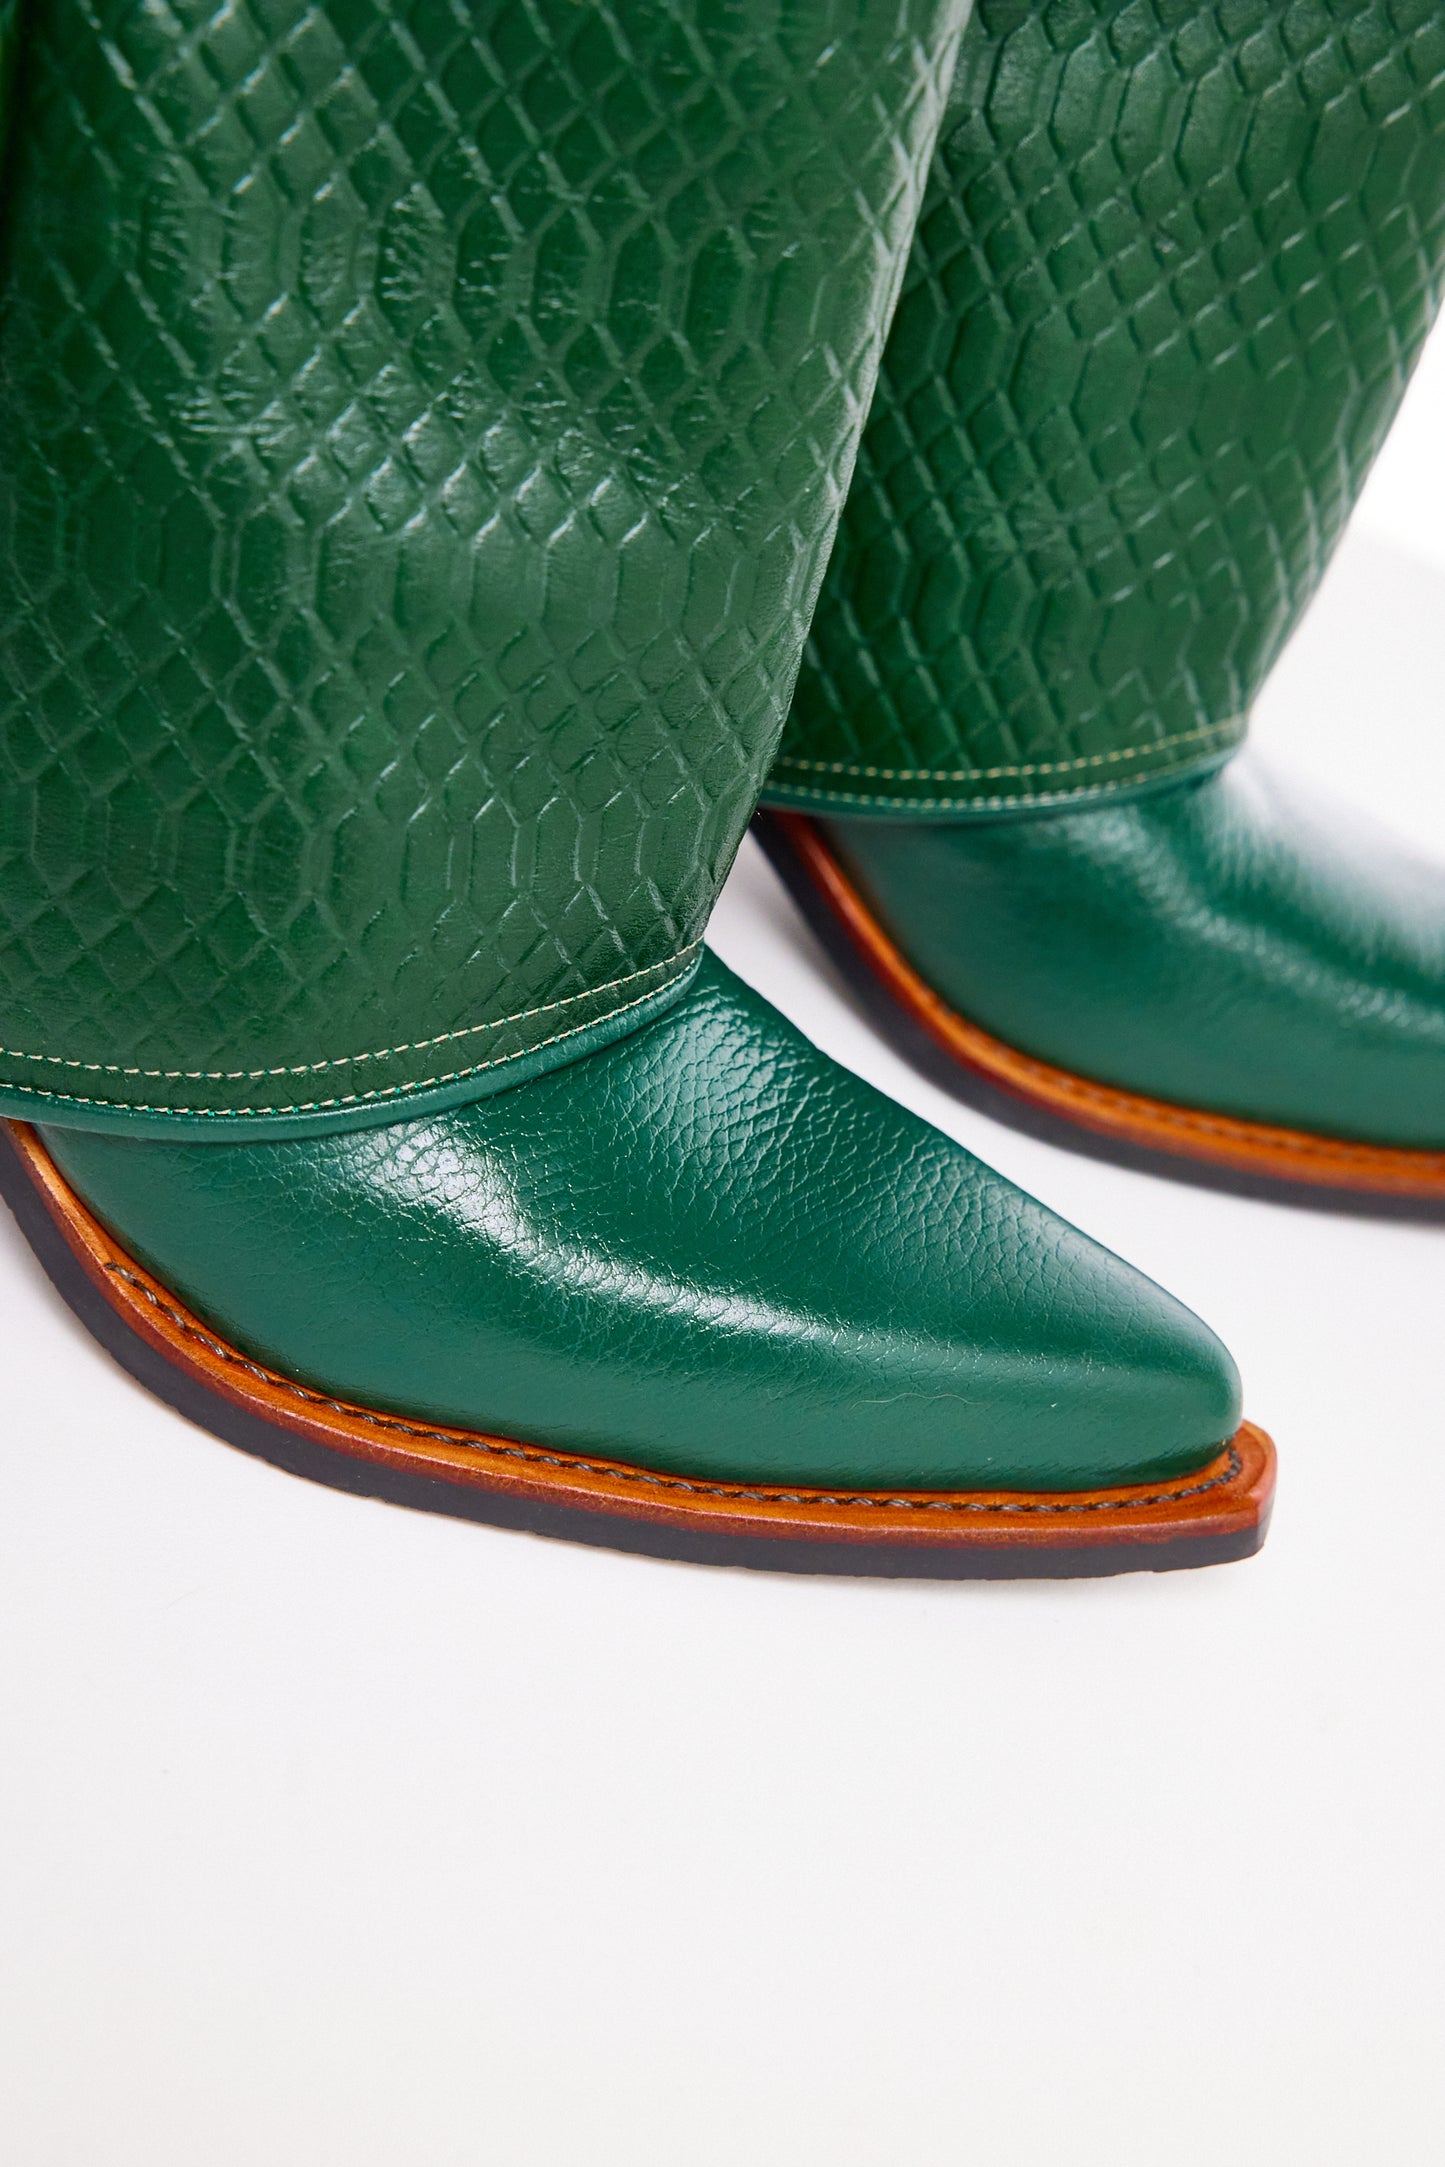 Loza Green Boots